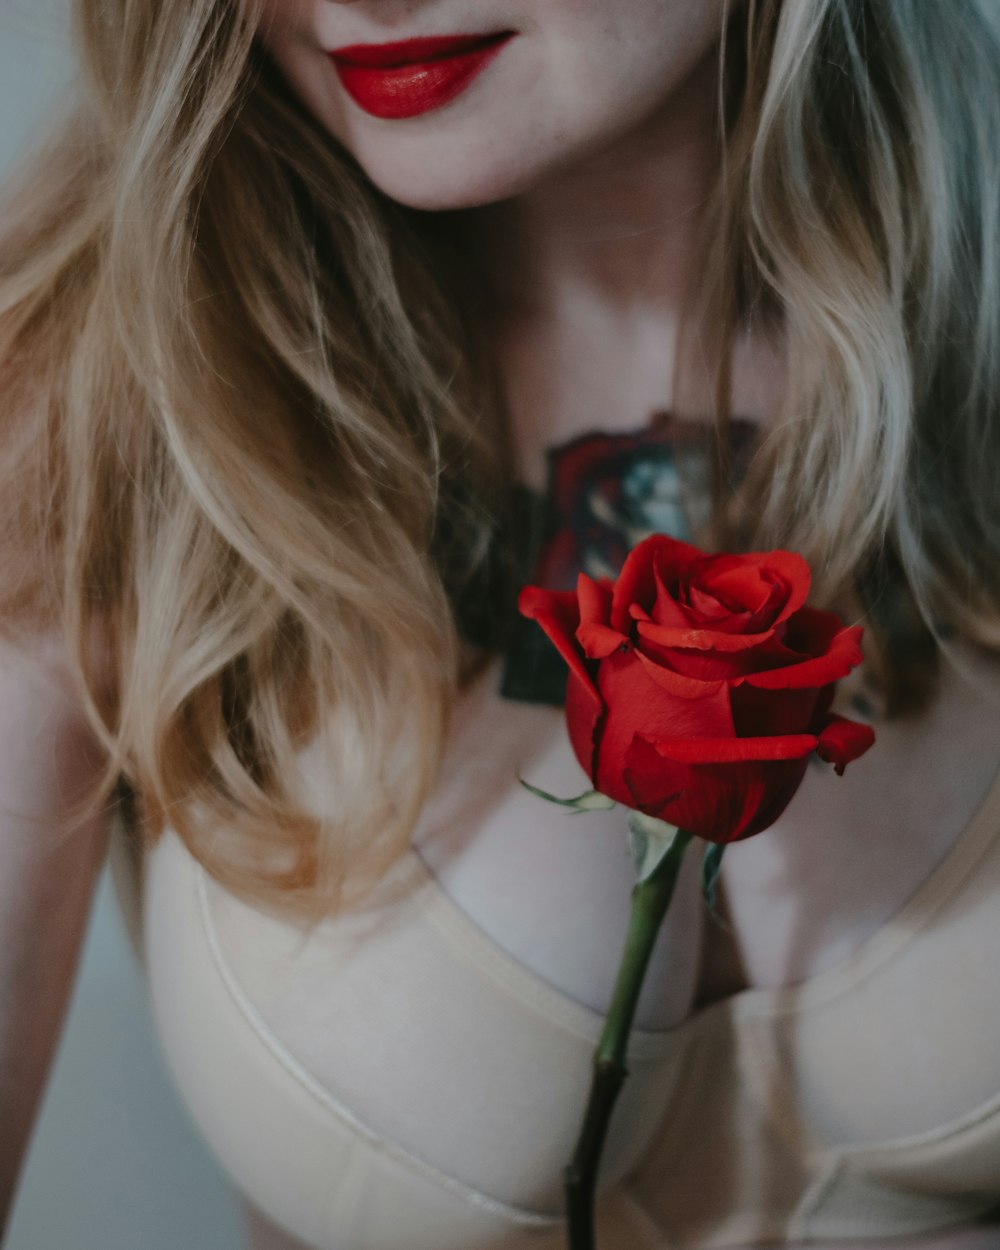 Bakterie Årligt fortvivlelse Woman in white tank top holding red rose photo – Free Girl with flowers  Image on Unsplash